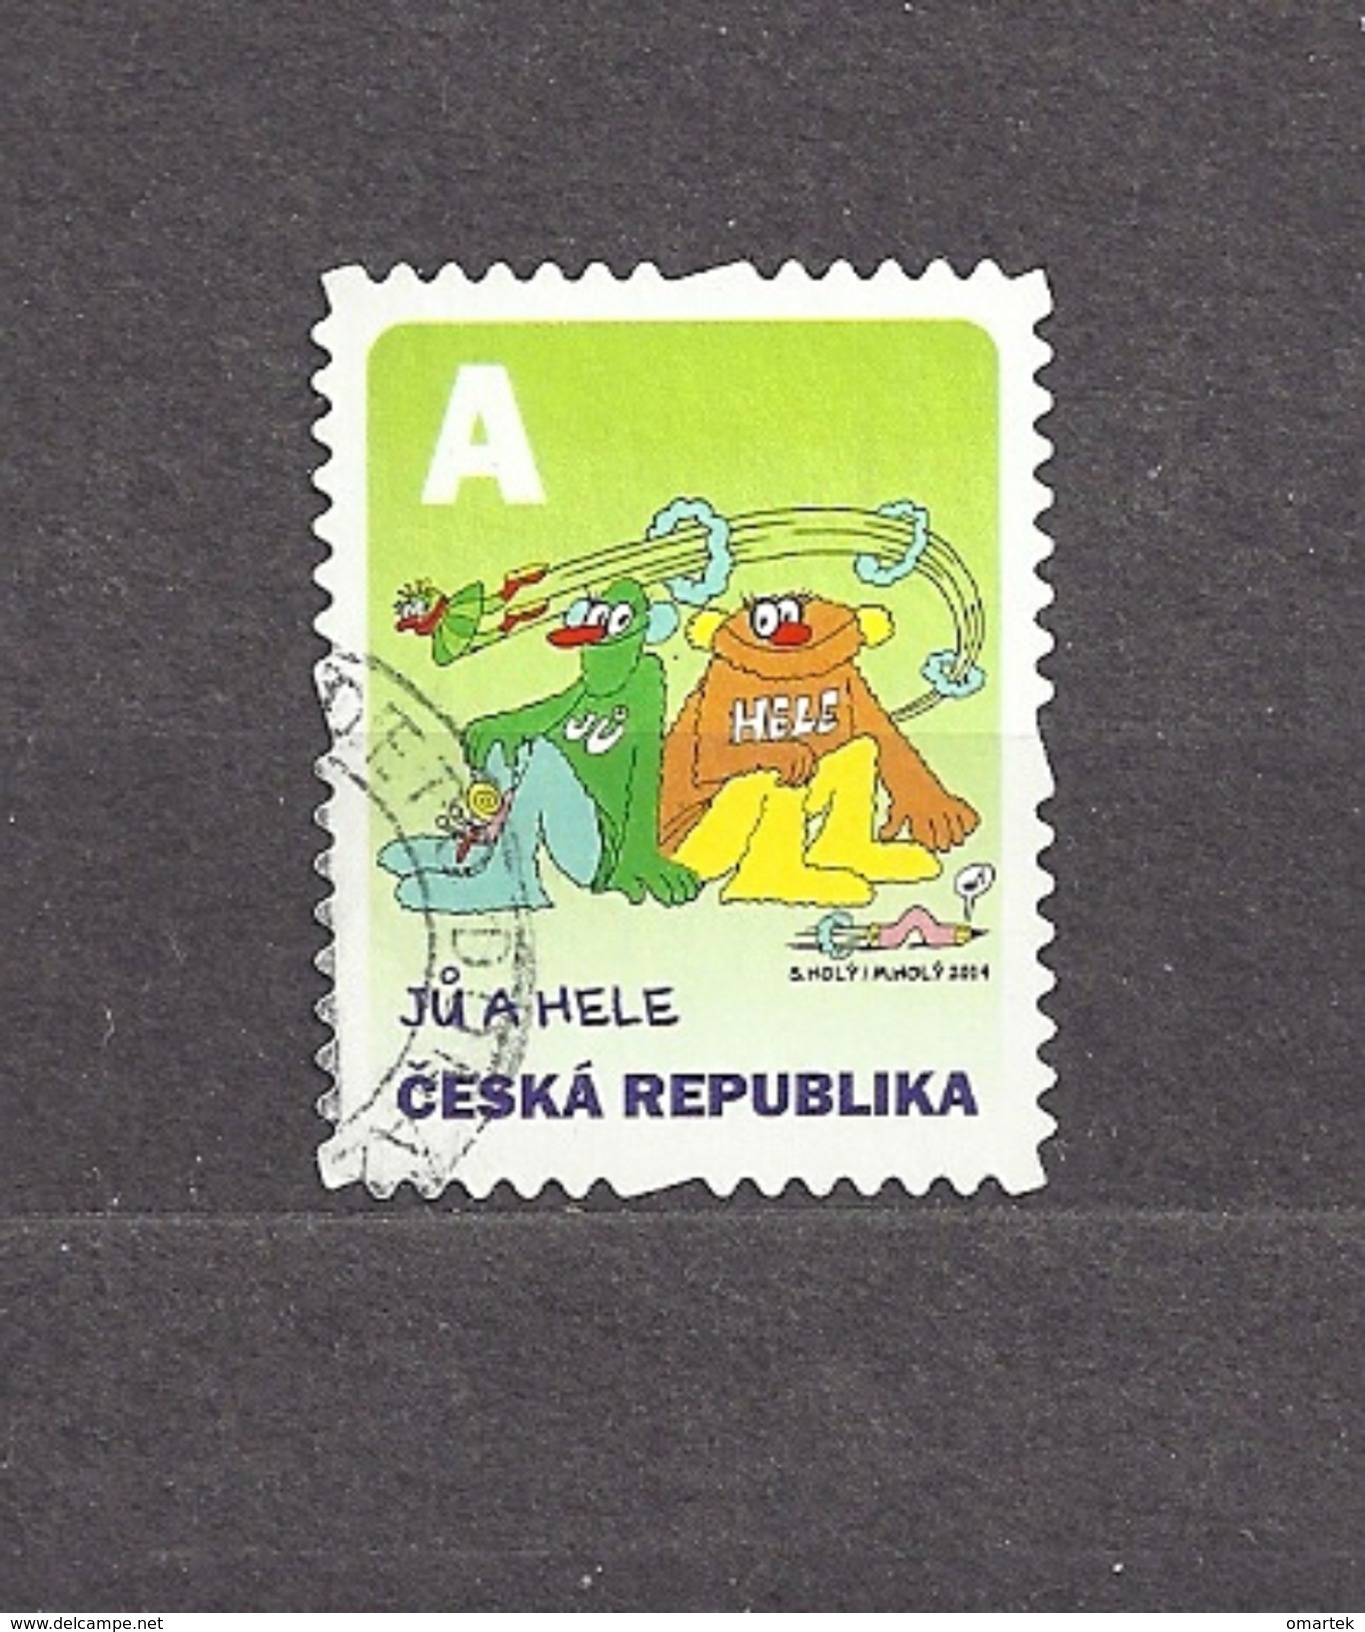 Czech Republic  Tschechische Republik  2014 ⊙ Mi 807 Ju And Hele . C.12 - Used Stamps